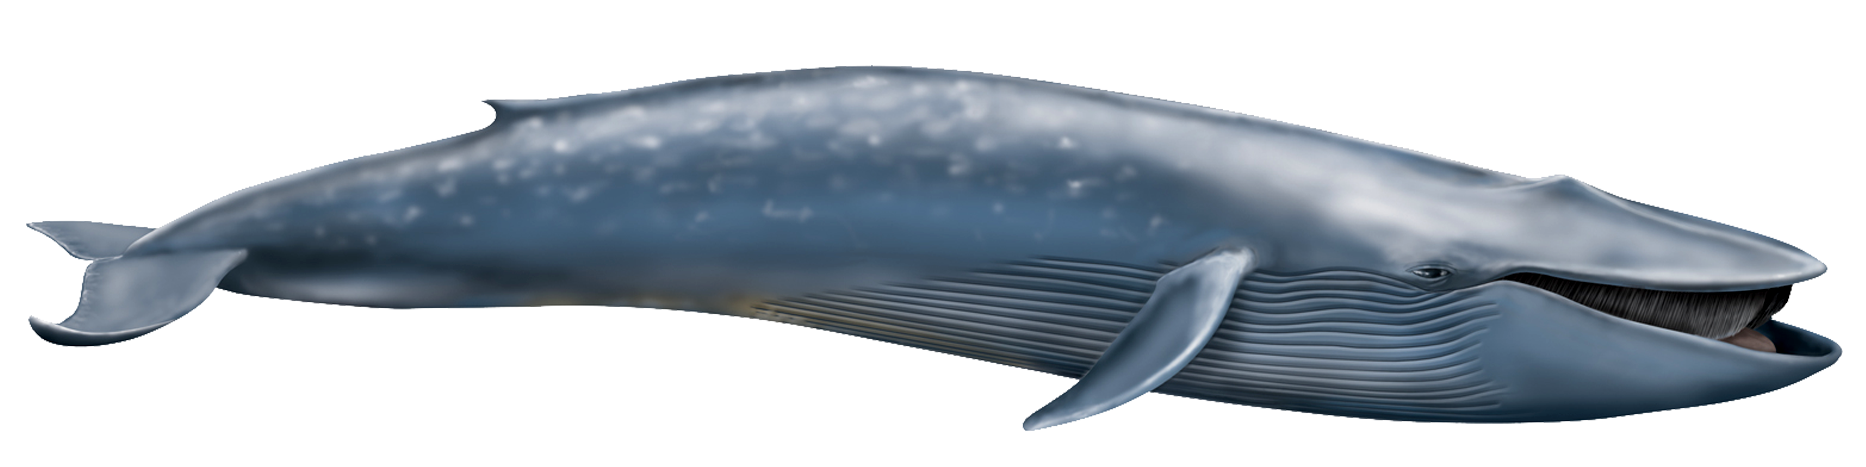 Blue Whale Png Transparent - Whale, Transparent background PNG HD thumbnail